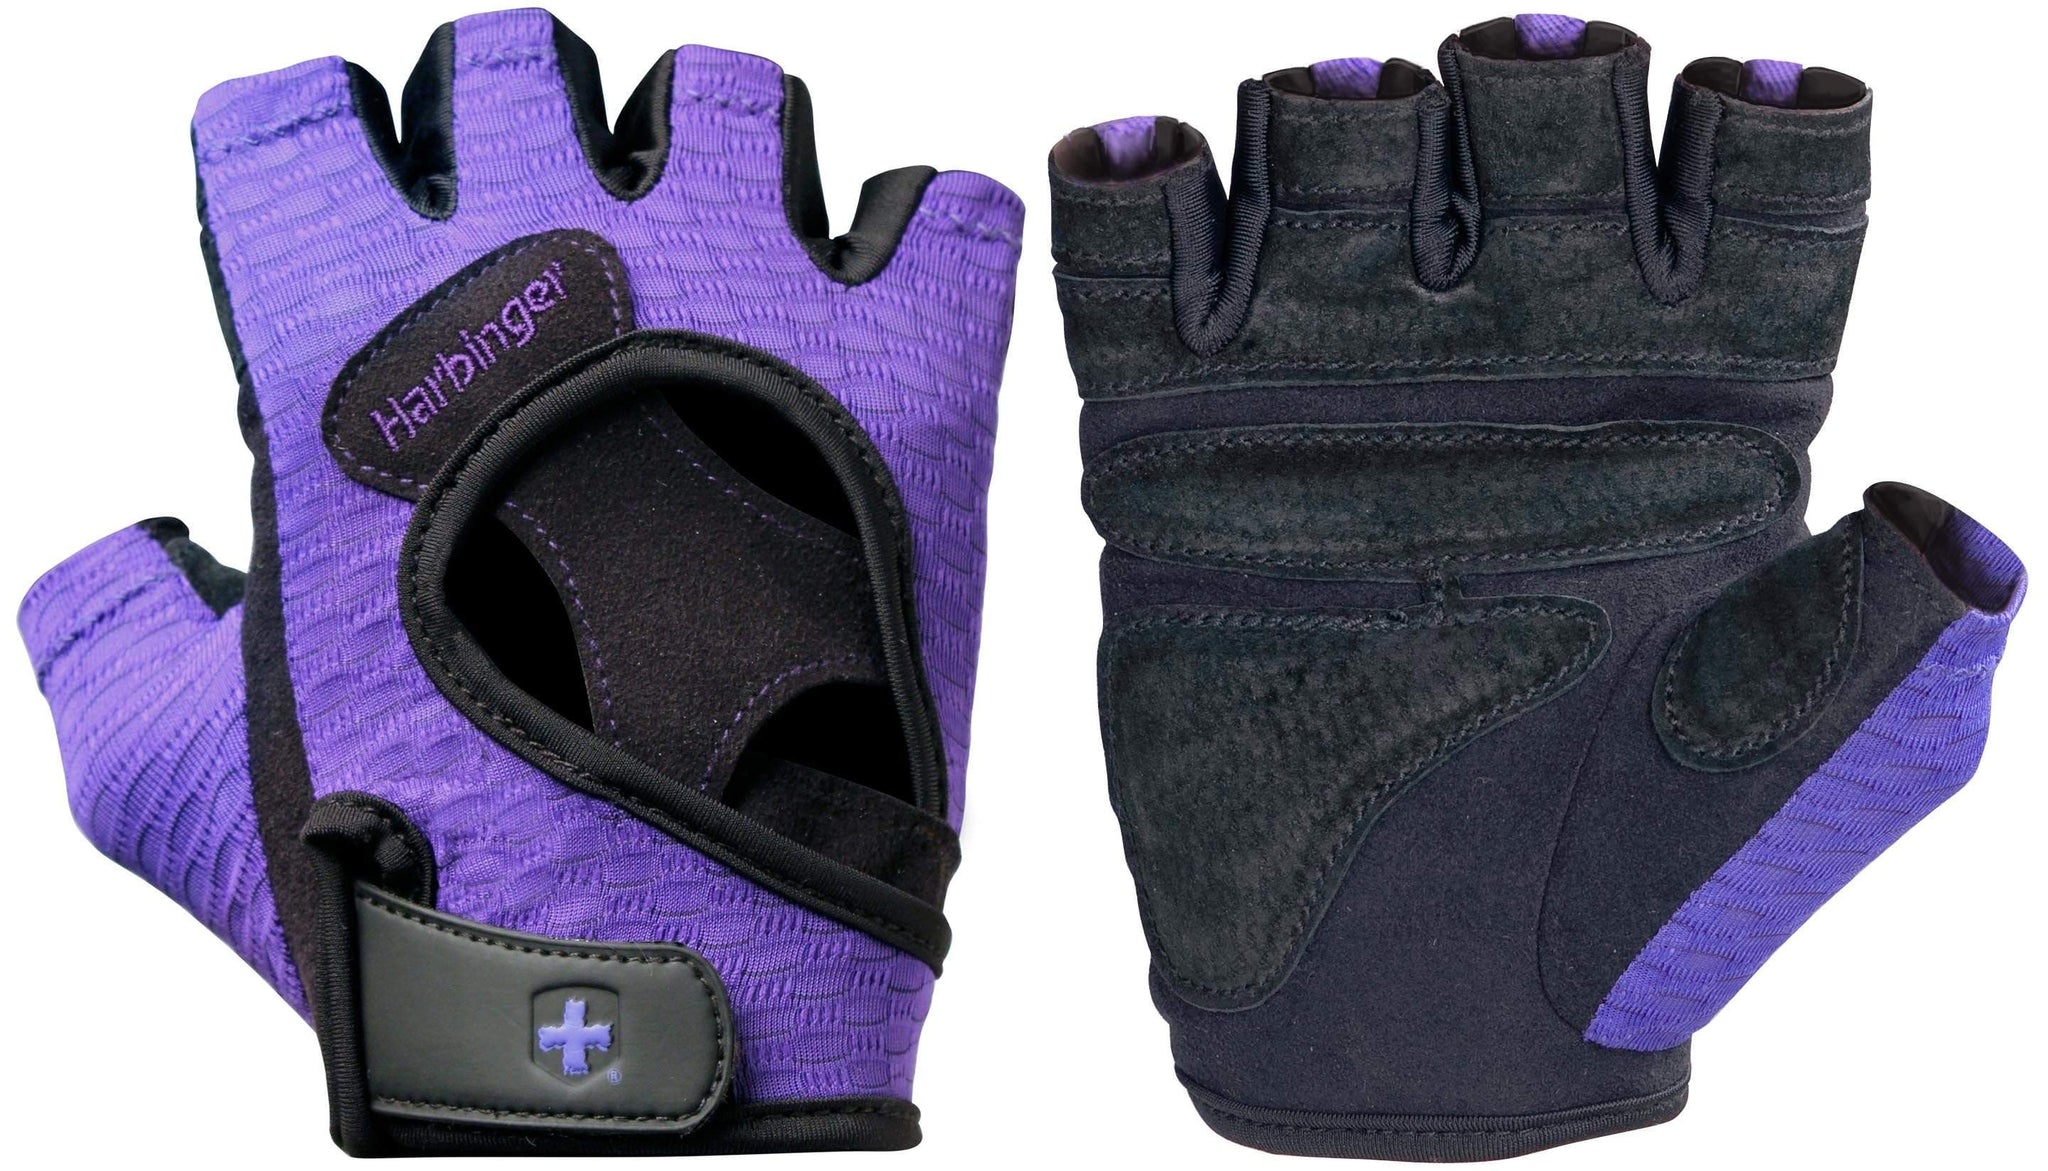 Women's Fitness Gloves - Black/Purple